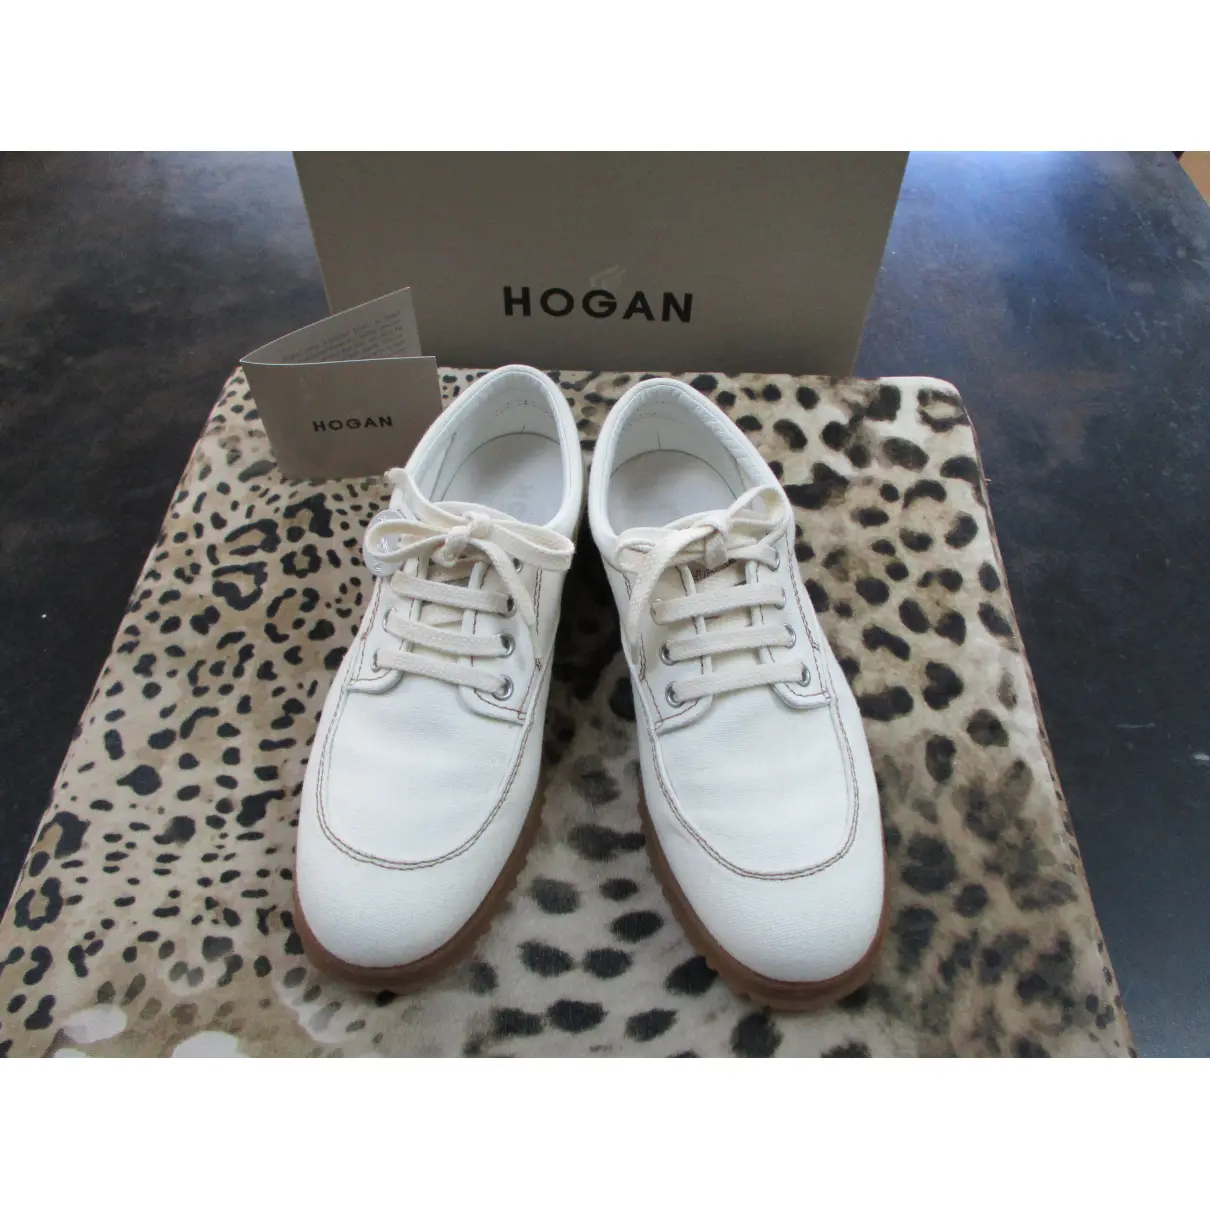 Buy Hogan Cloth trainers online